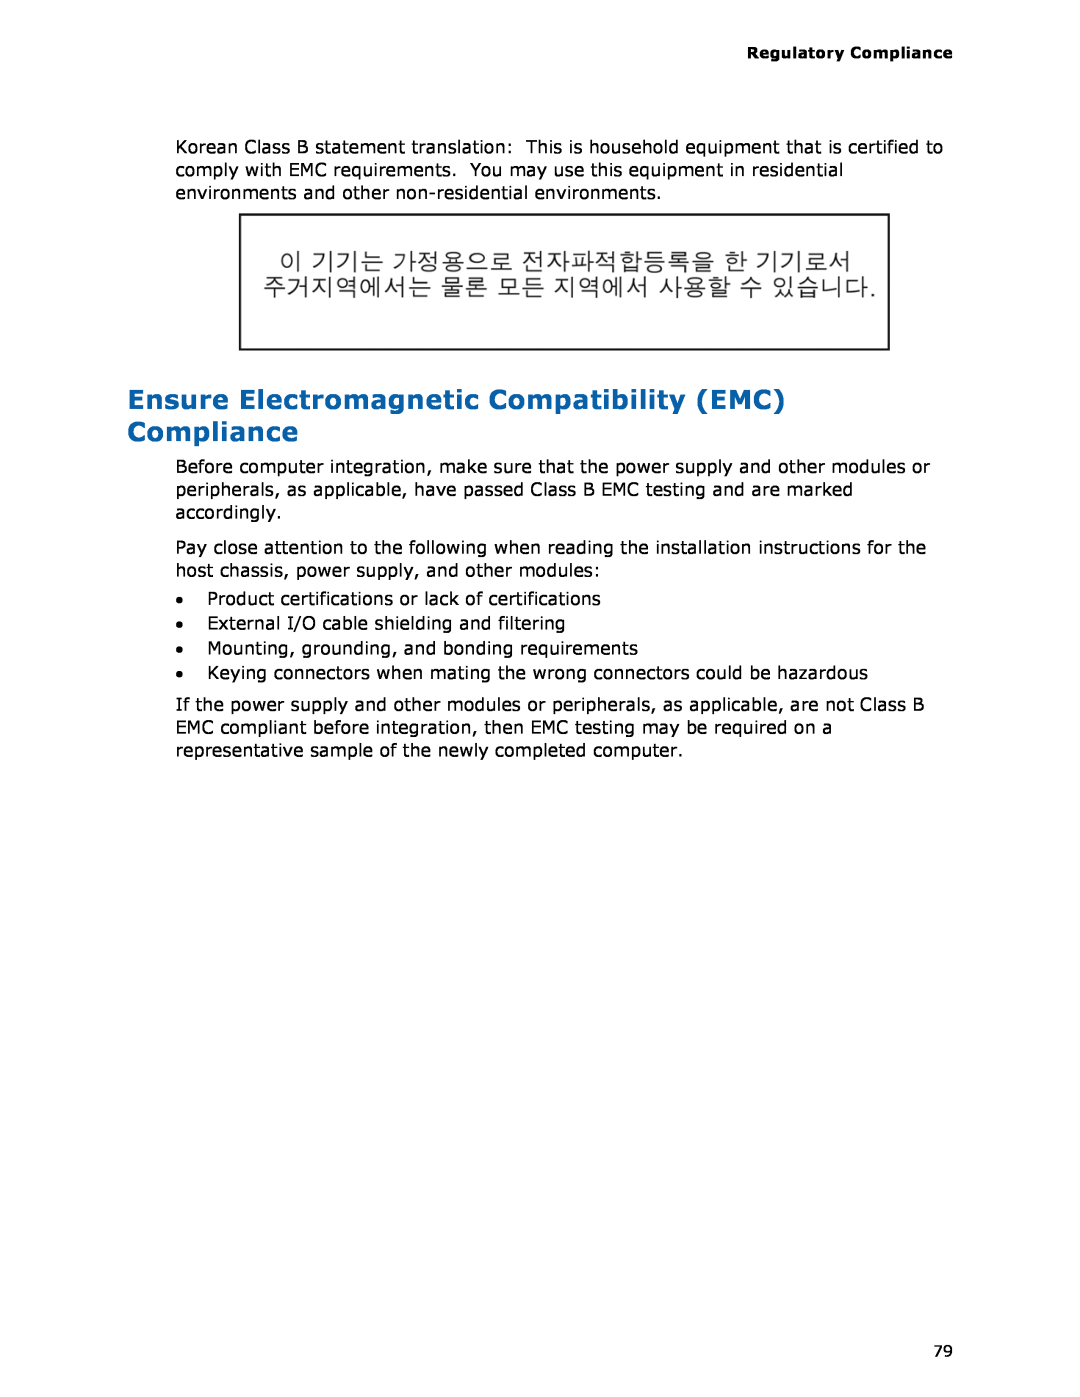 Intel BOXDH55HC manual Ensure Electromagnetic Compatibility EMC Compliance 